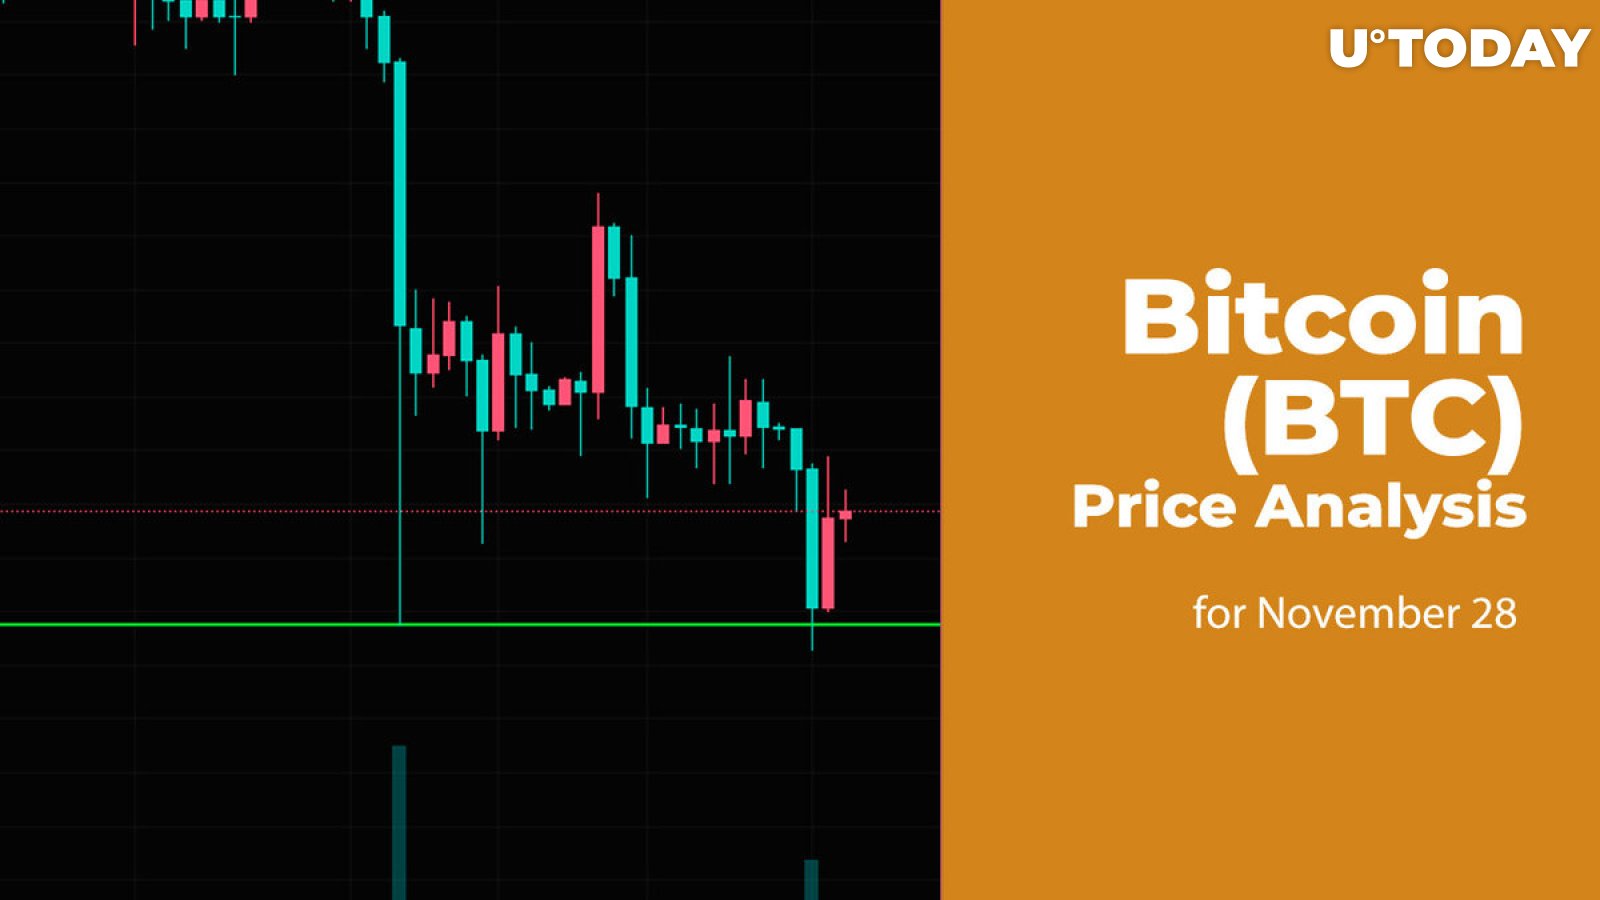 Bitcoin (BTC) Price Analysis for November 28